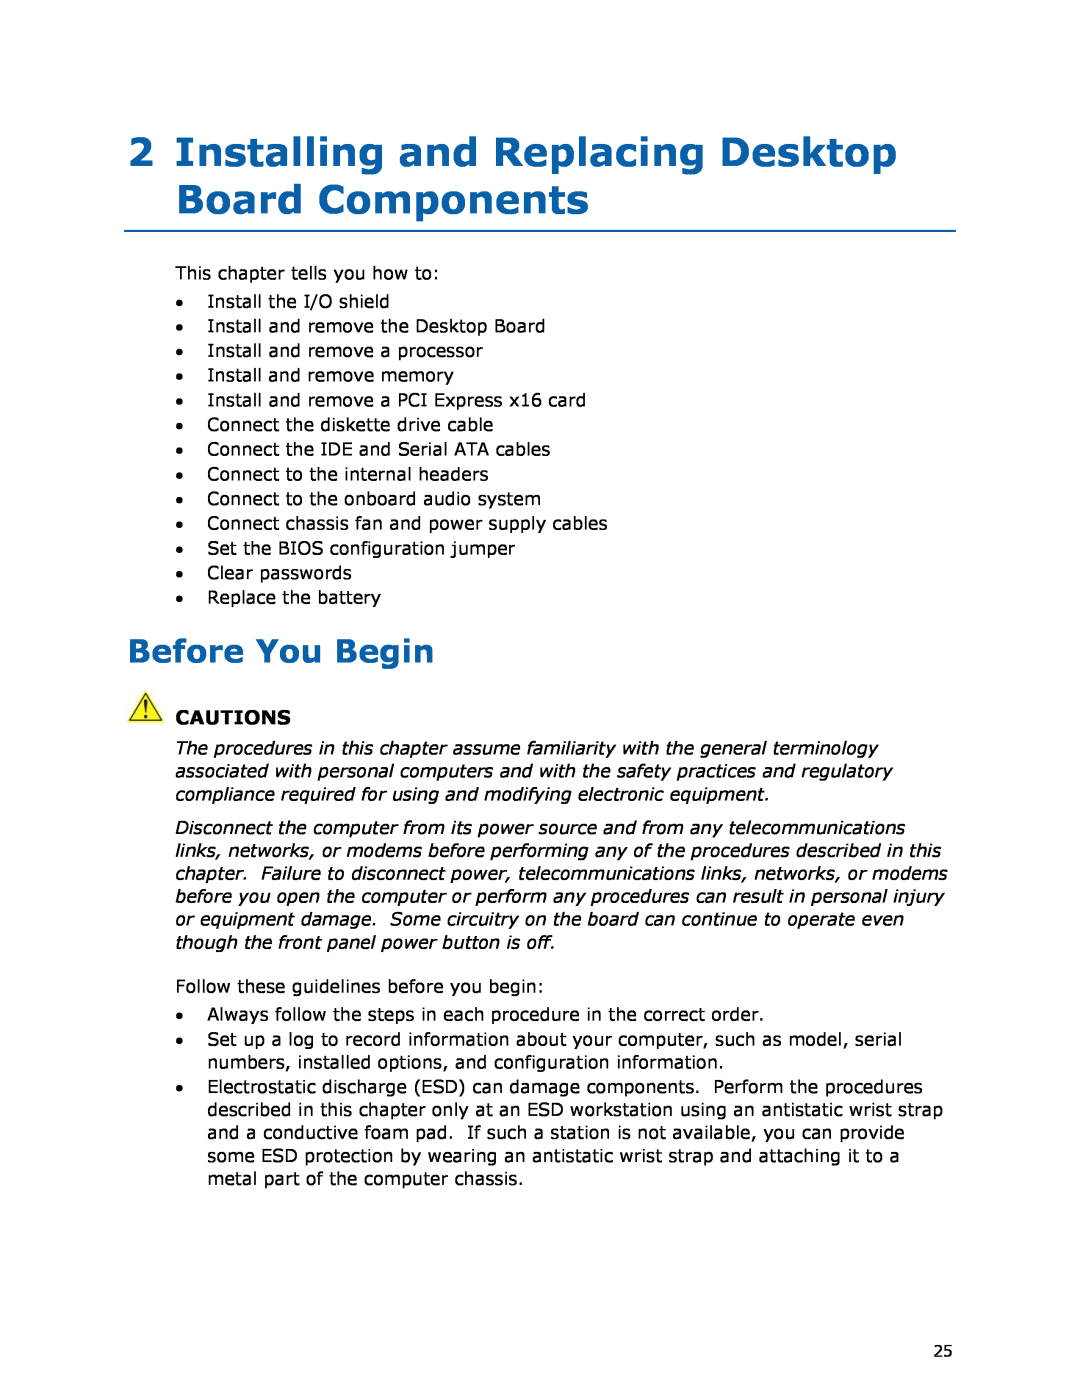 Intel DG35EC, Intel Desktop Board manual Installing and Replacing Desktop Board Components, Before You Begin, Cautions 